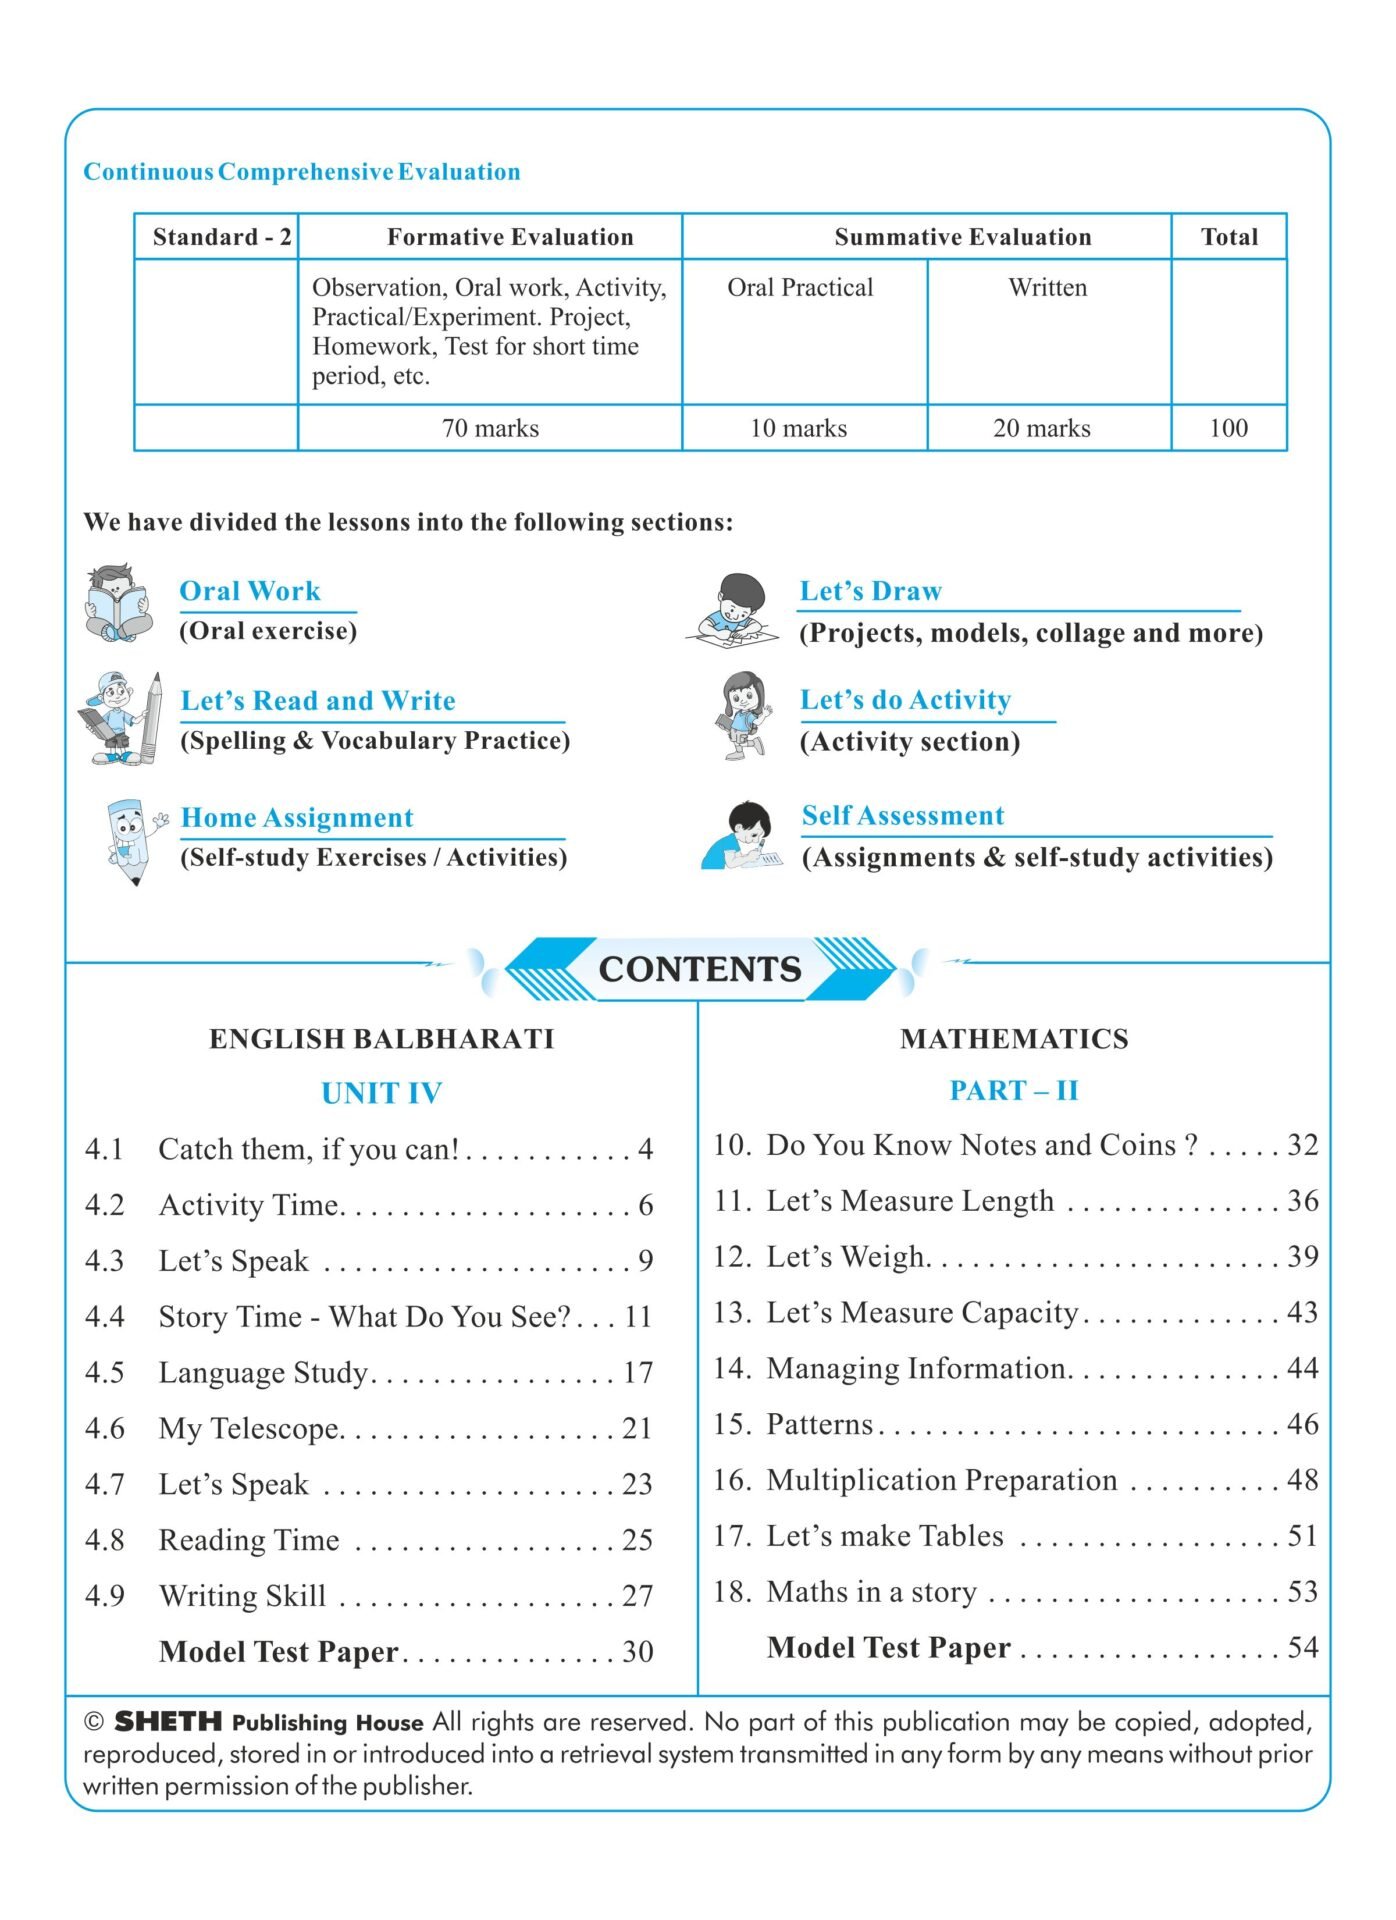 CCE Pattern Nigam Scholar Workbooks Termwise Integrated Workbook English Balbharati and Mathematics Standard 2 Term 2 Book 2 2